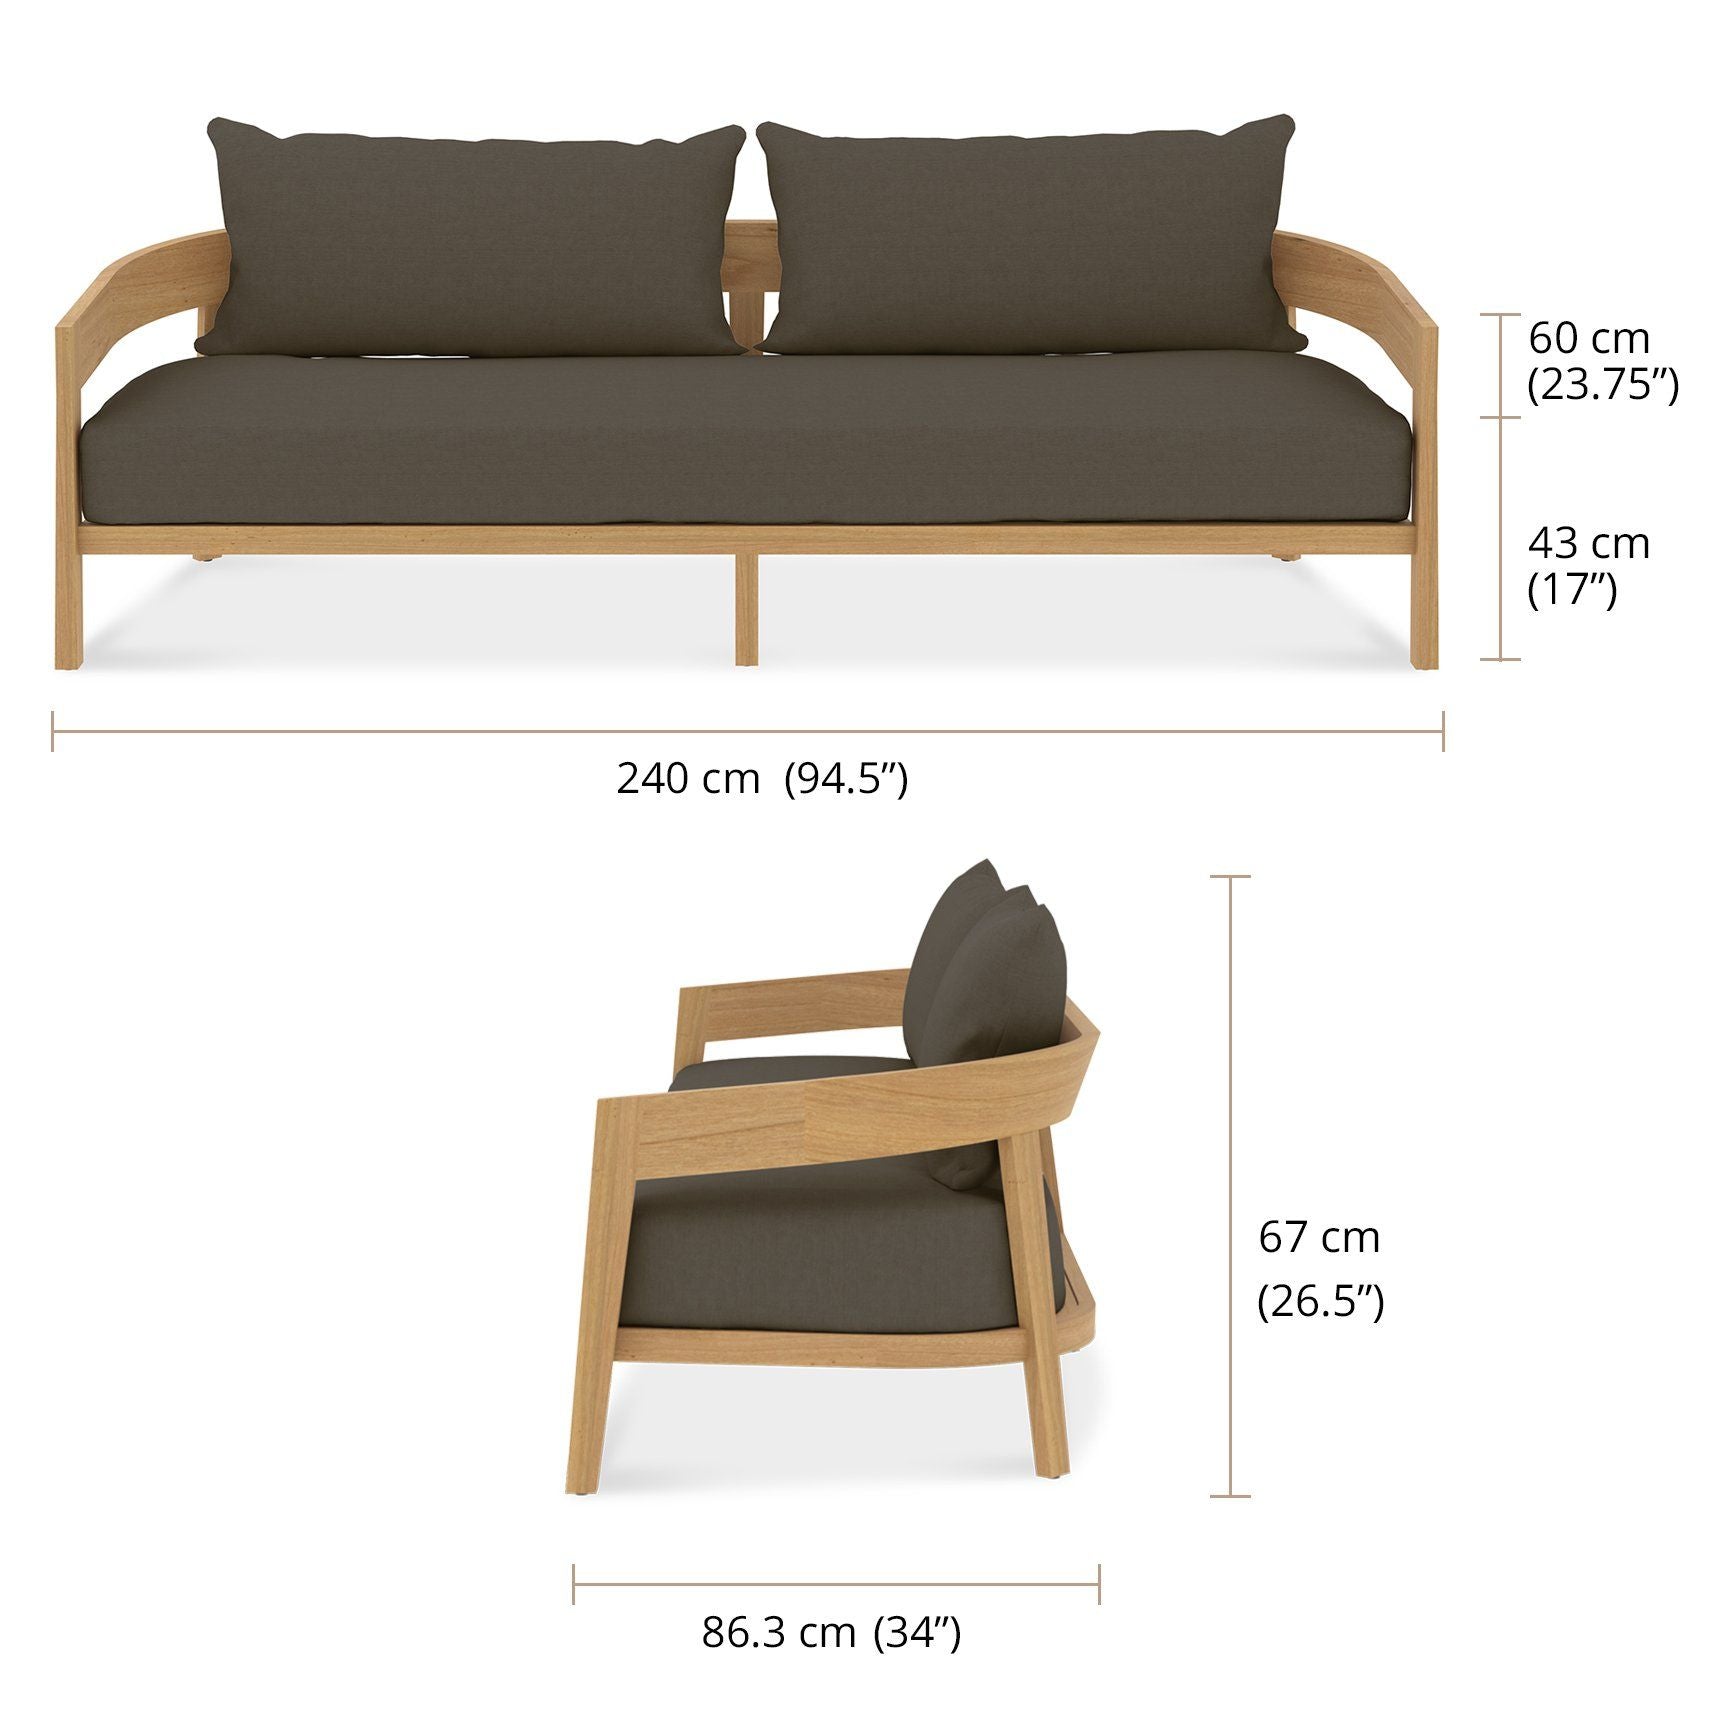 The Windsor Teak 3 Seater Sofa Dimensions